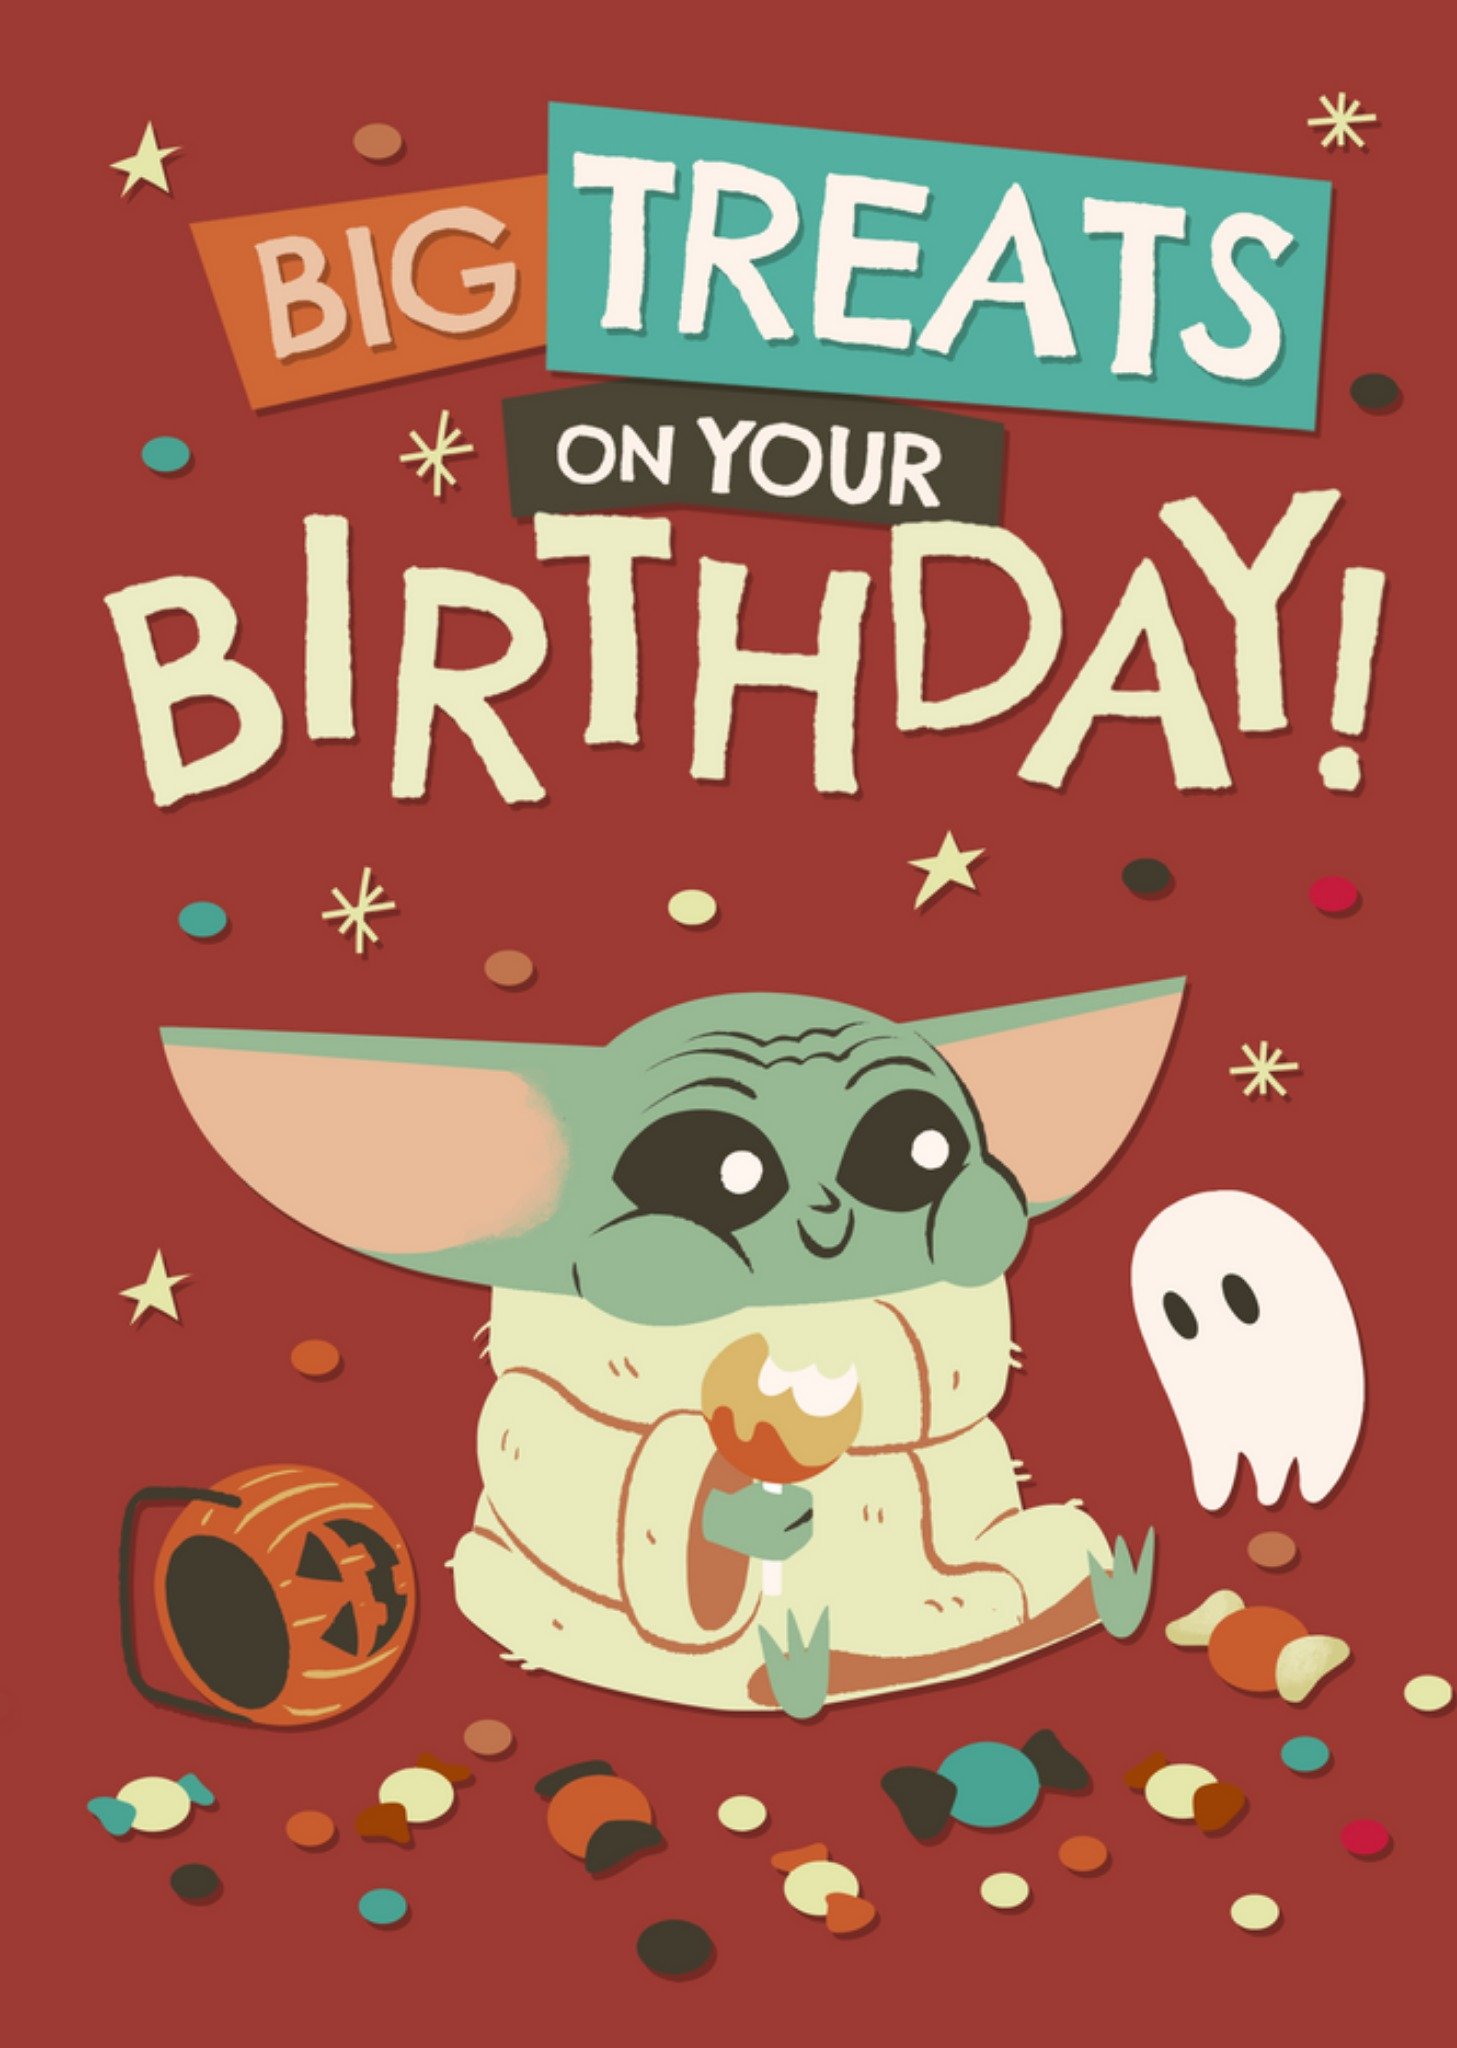 Disney Star Wars The Mandalorian Big Treats On Your Birthday Card, Large